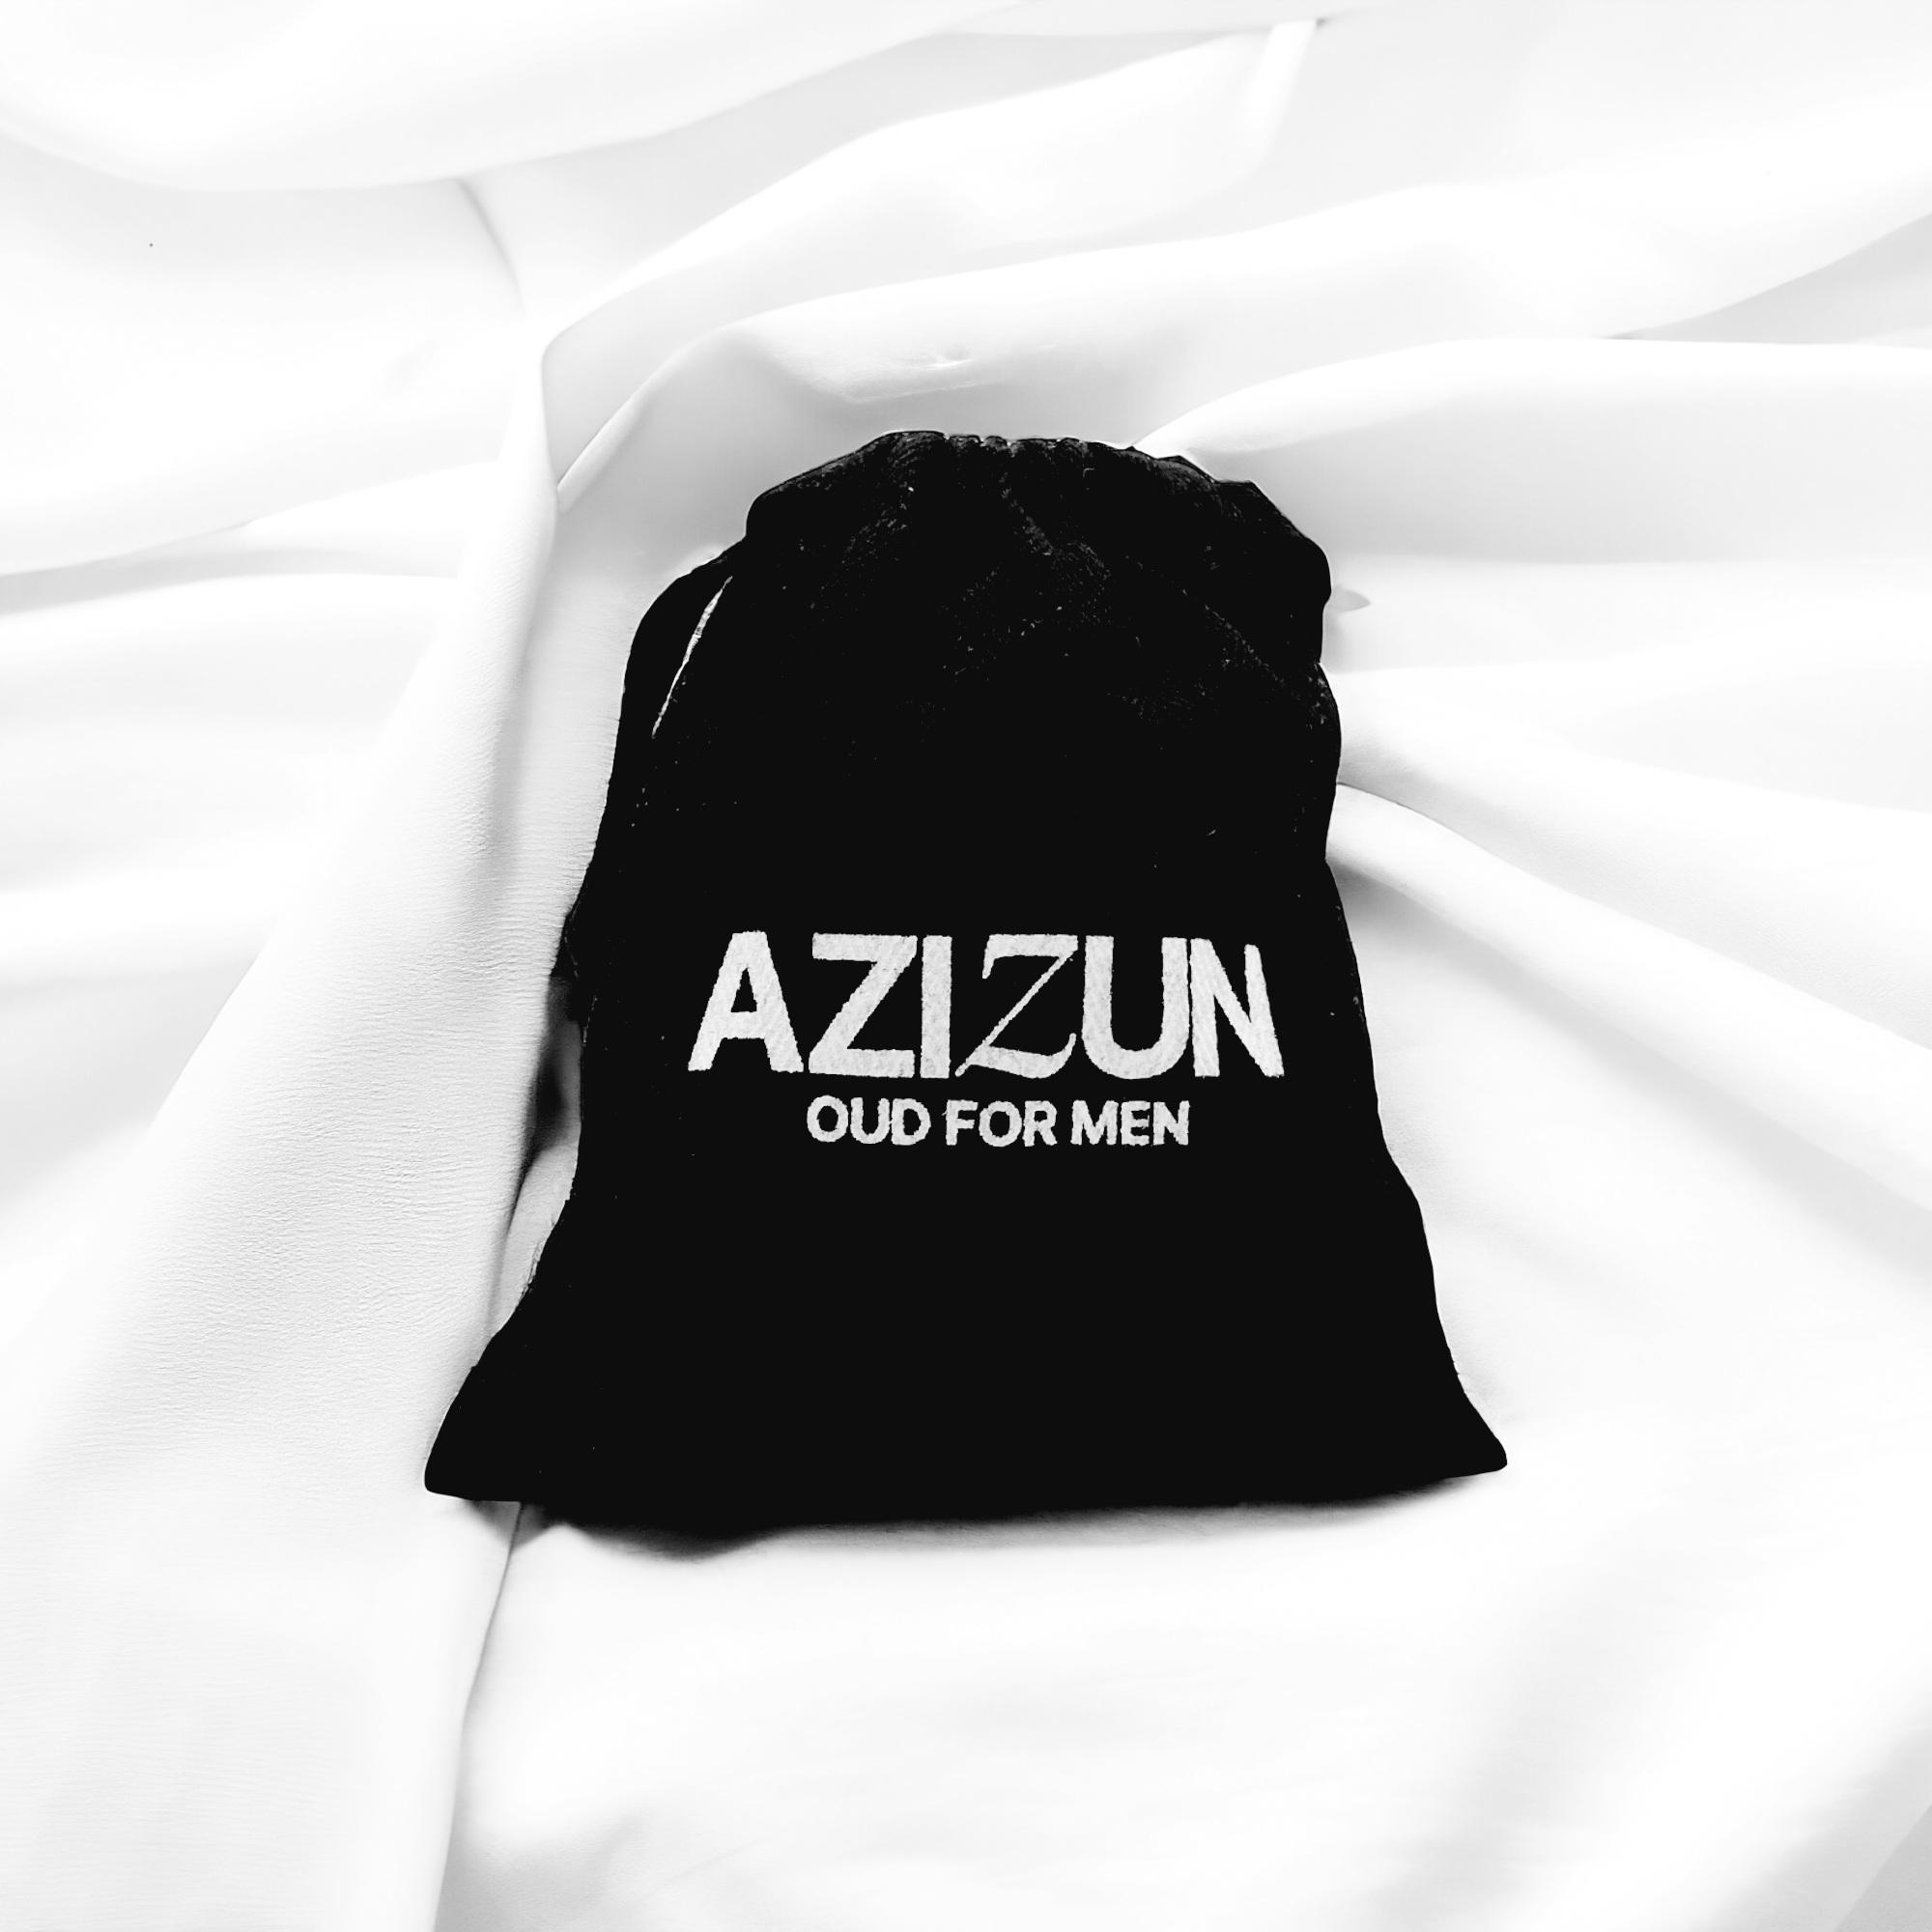 Azizun Oud for Men travel pouch